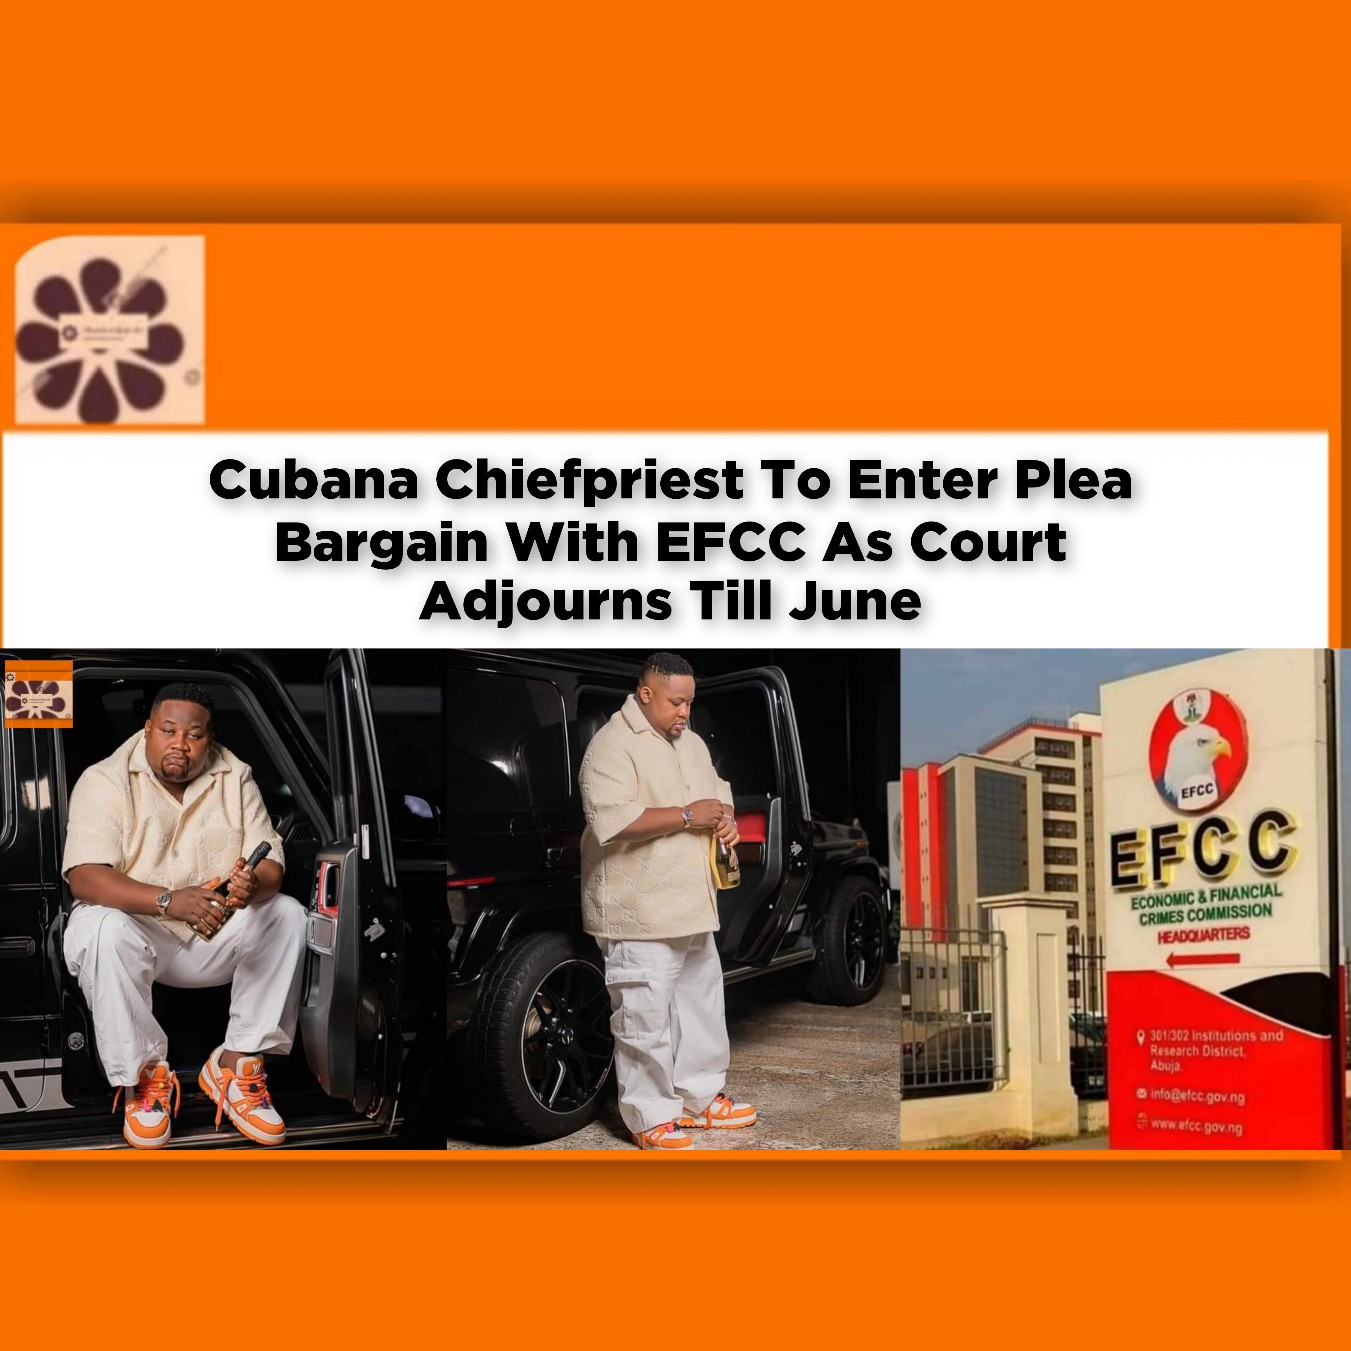 Cubana Chiefpriest To Enter Plea Bargain With EFCC As Court Adjourns Till June ~ OsazuwaAkonedo #North